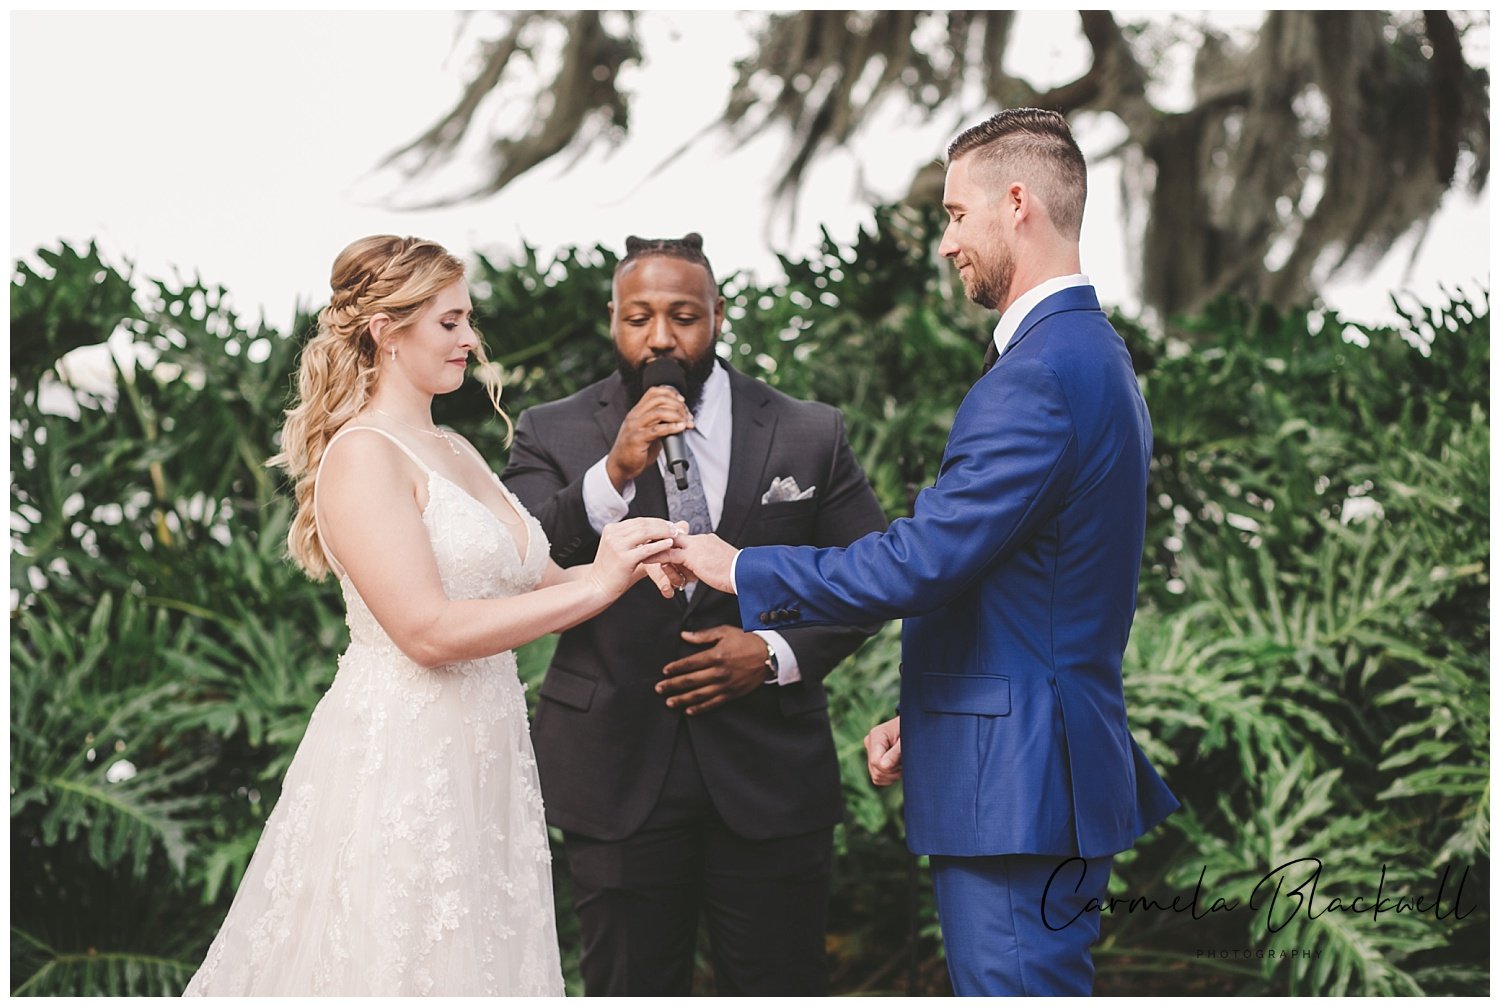 Weddings at Adams Estate Lake Alfred, FL- Carmela Blackwell Photography_0255.jpg